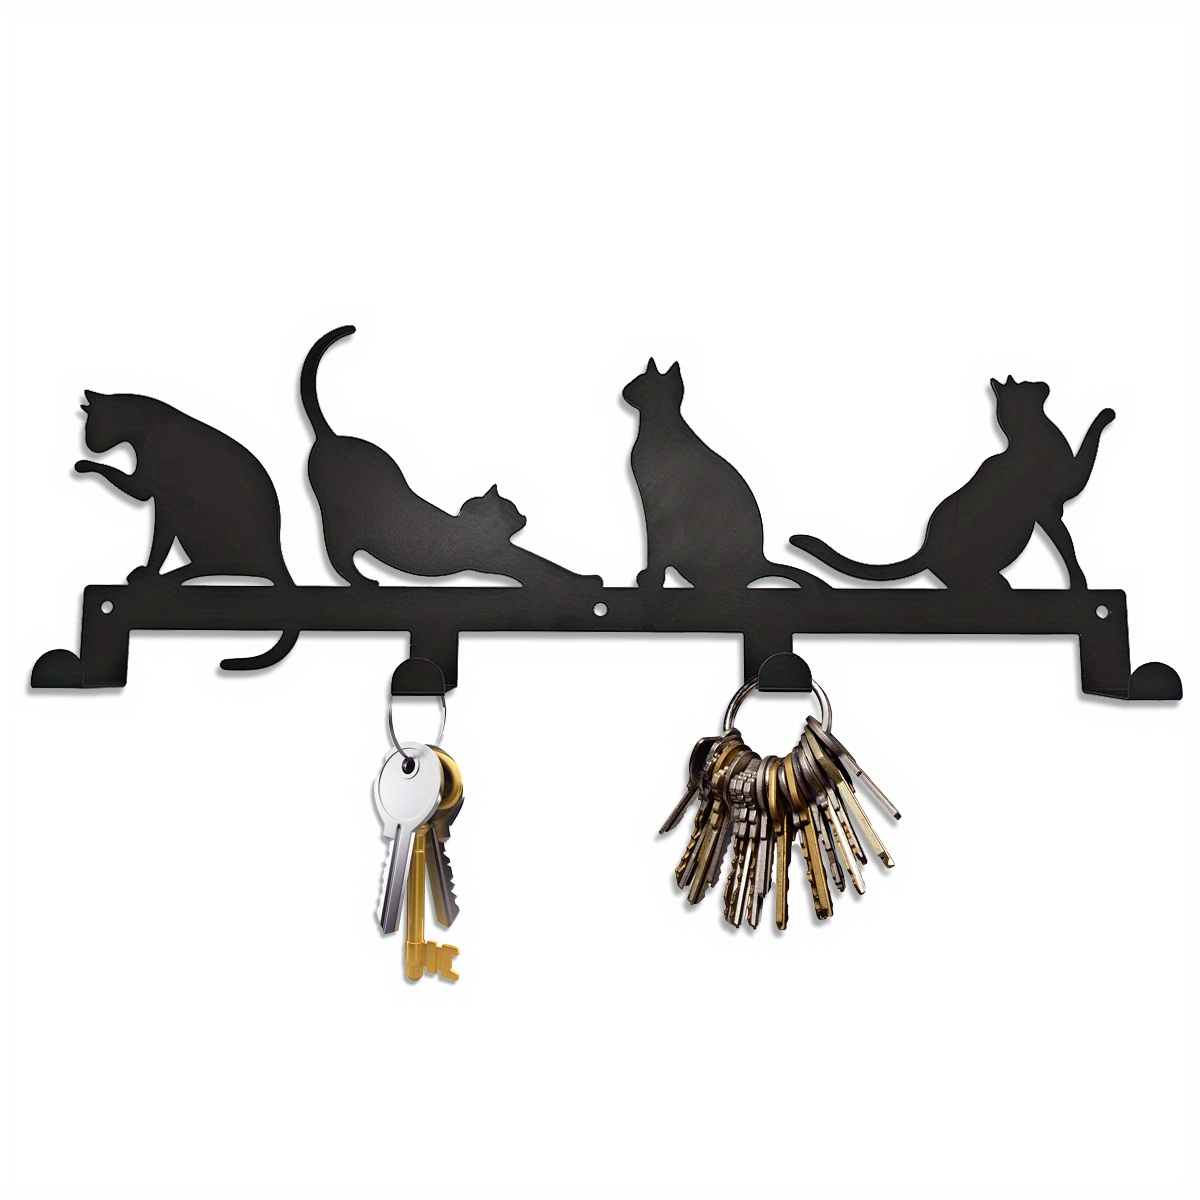 Metal Key Holder Wall Creative Birds/cats/owls Type Key Hook